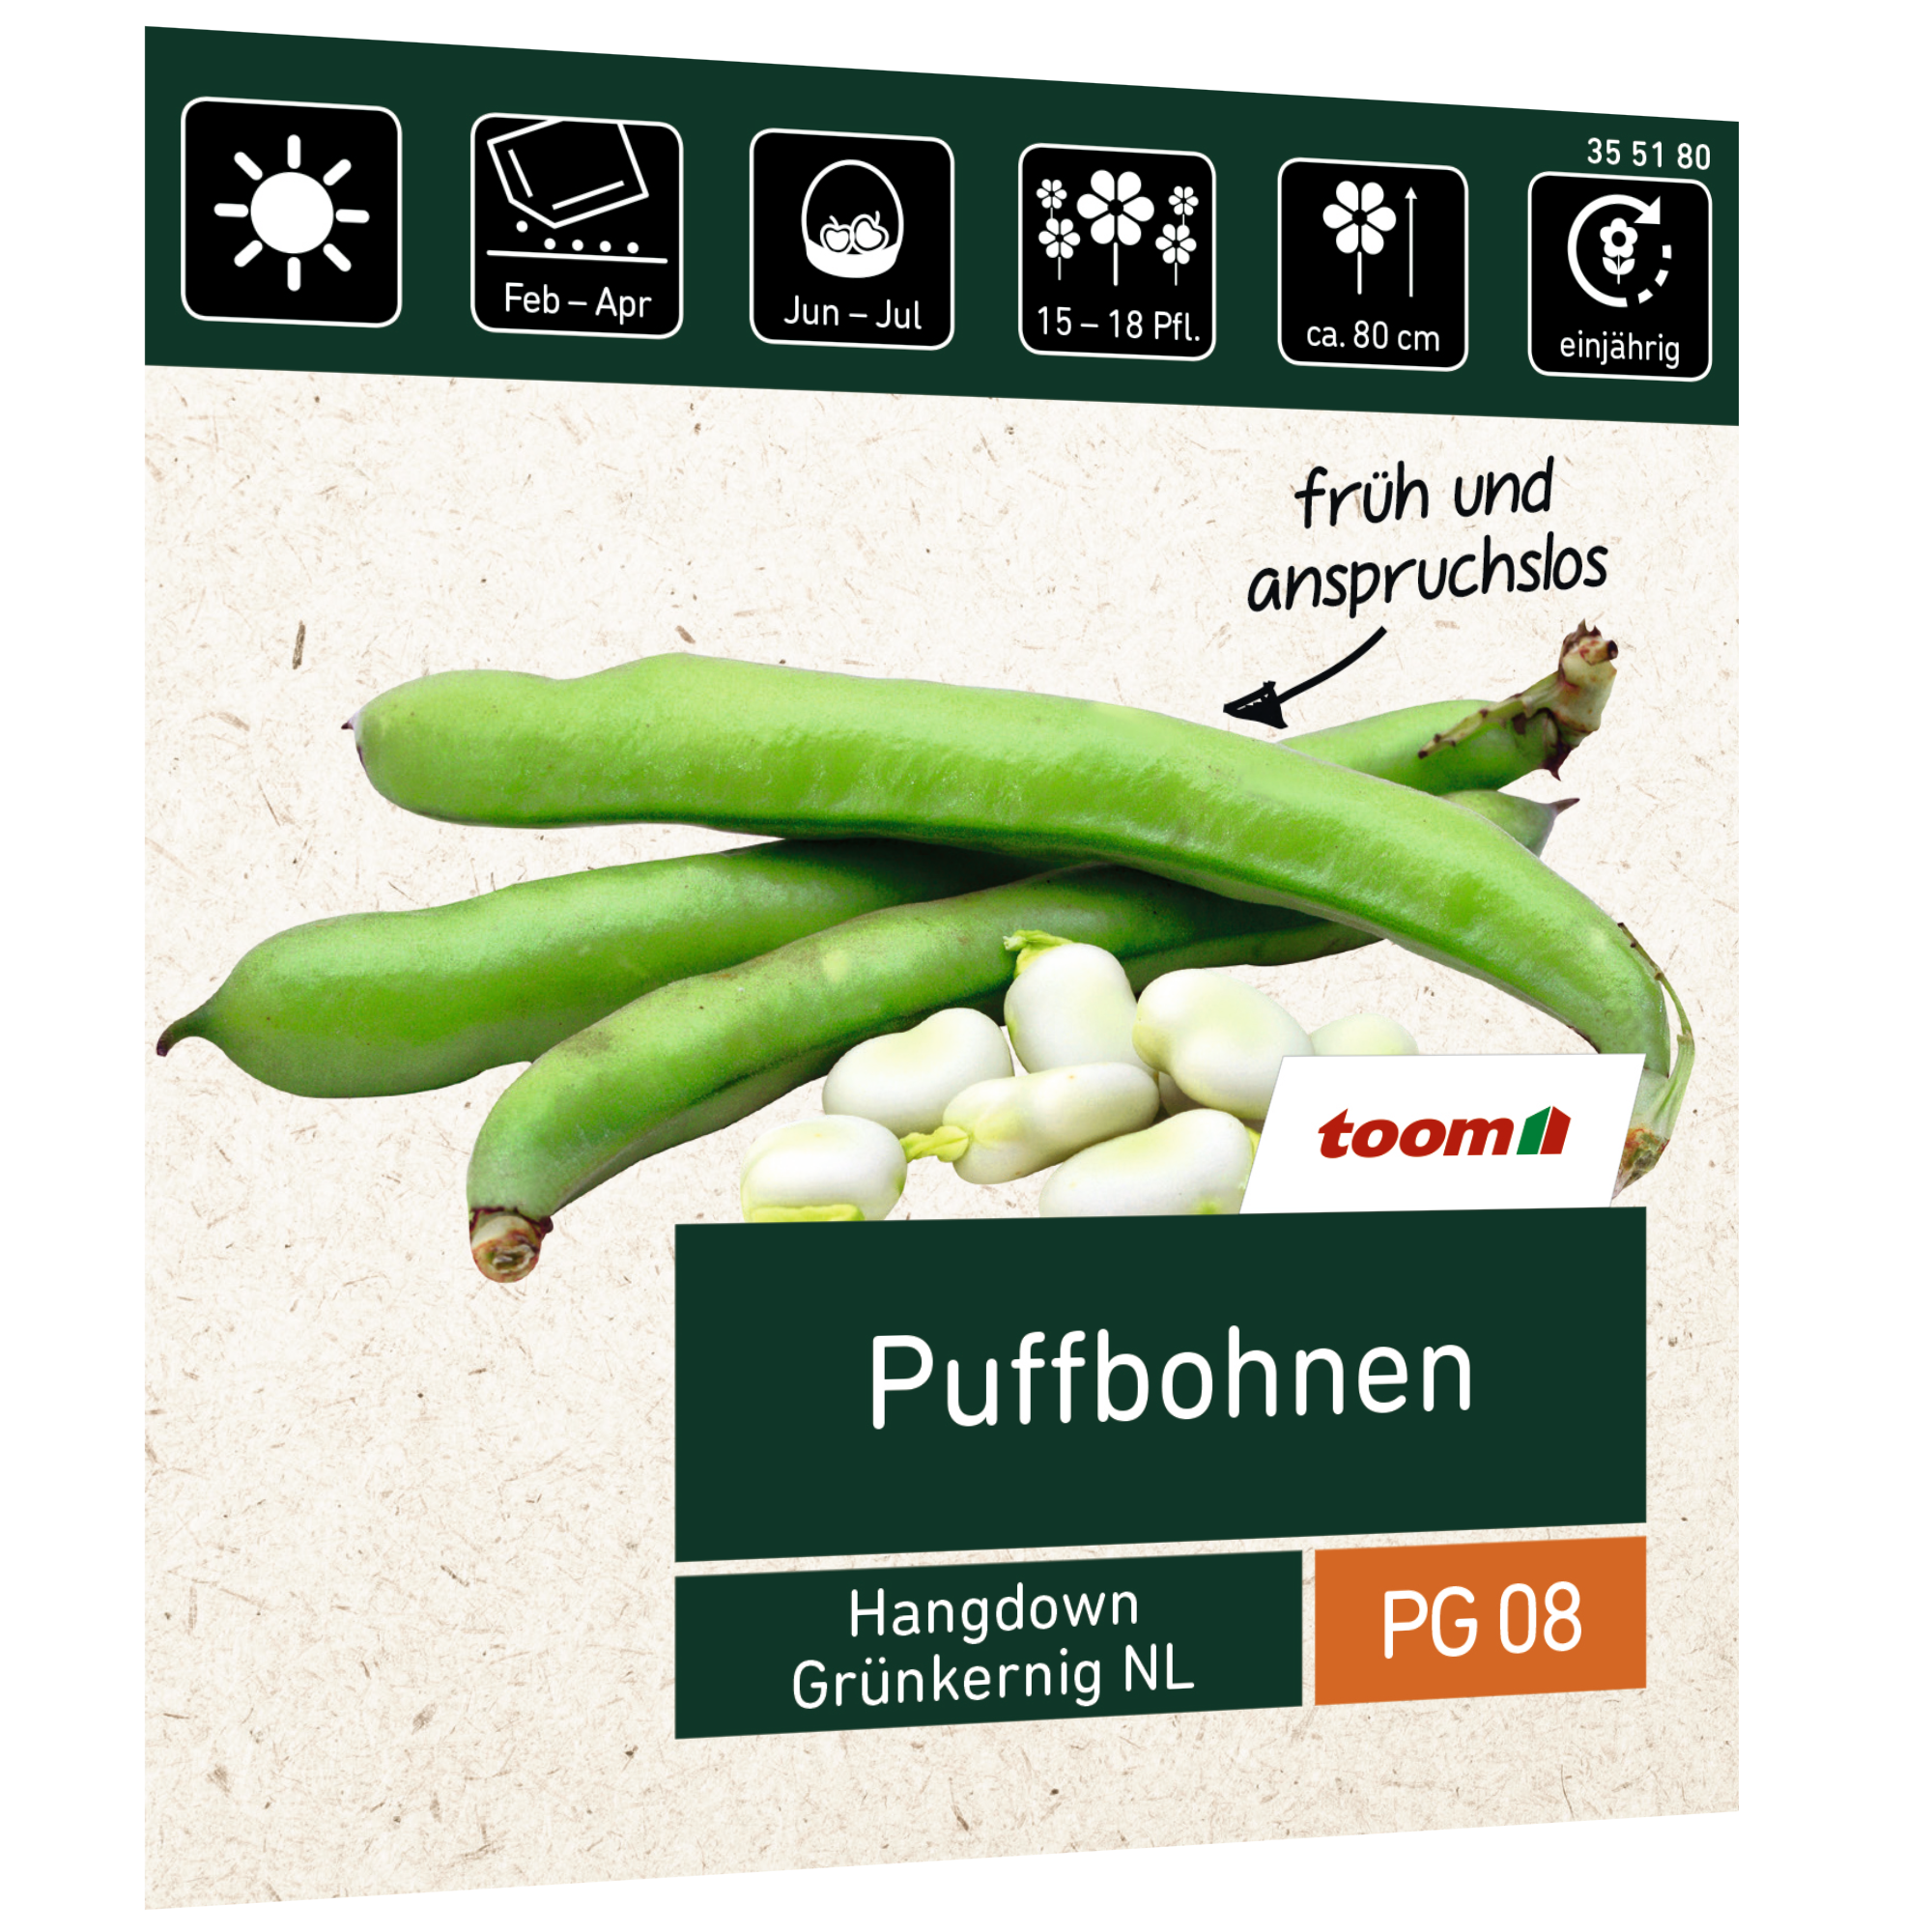 Puffbohnen 'Hangdown Grünkernig NL' + product picture